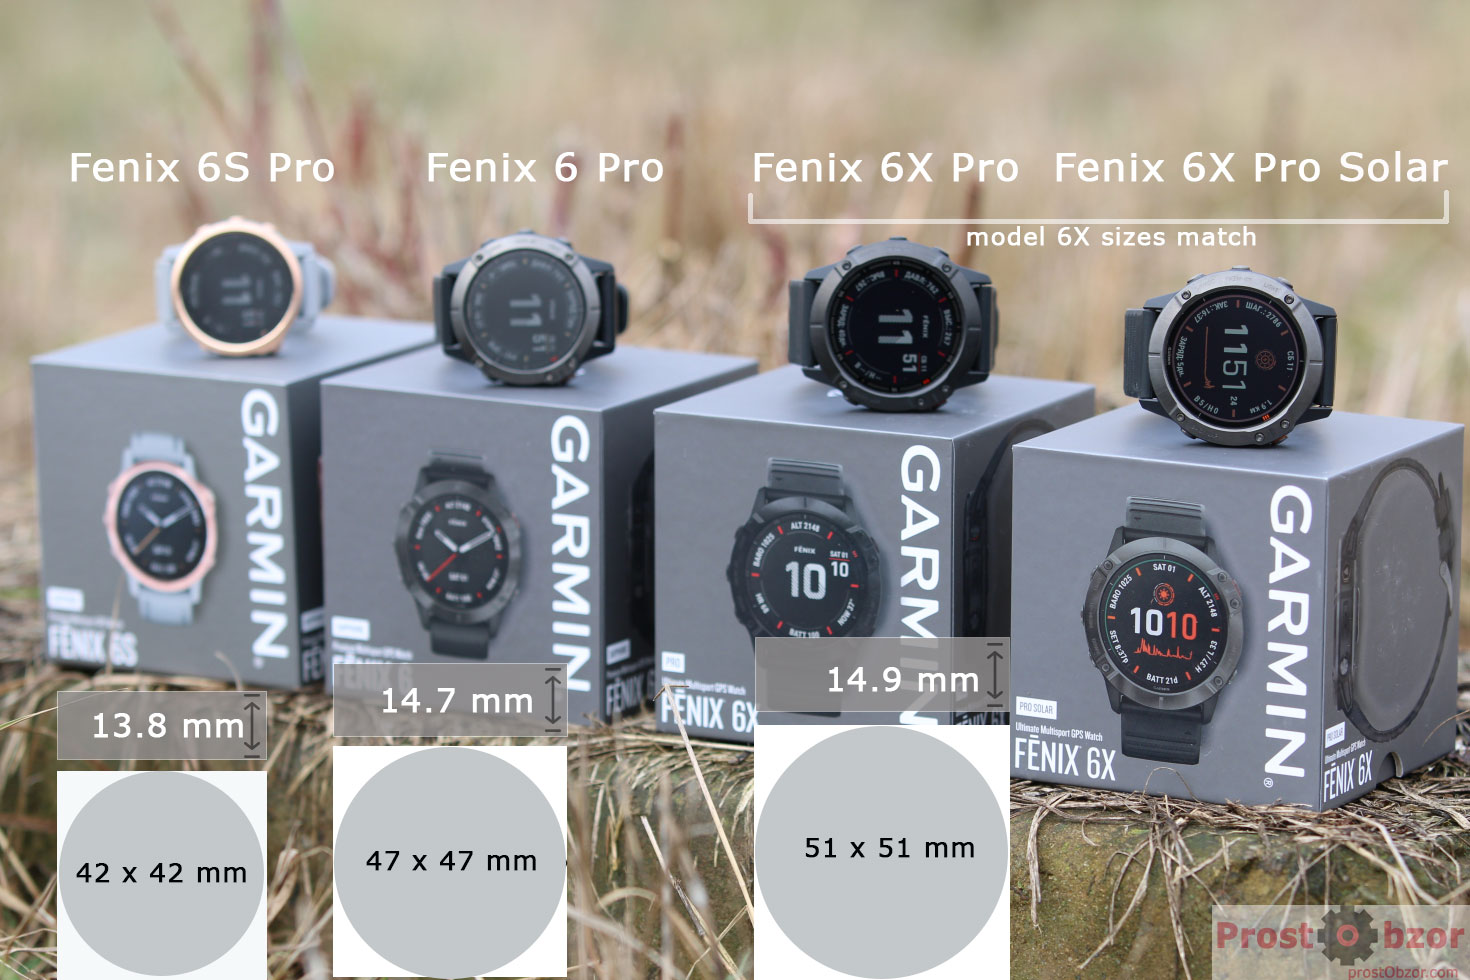 Garmin Fenix 6, 6S, 6X, and Fenix 6X Pro Solar: Prices, specs, and more